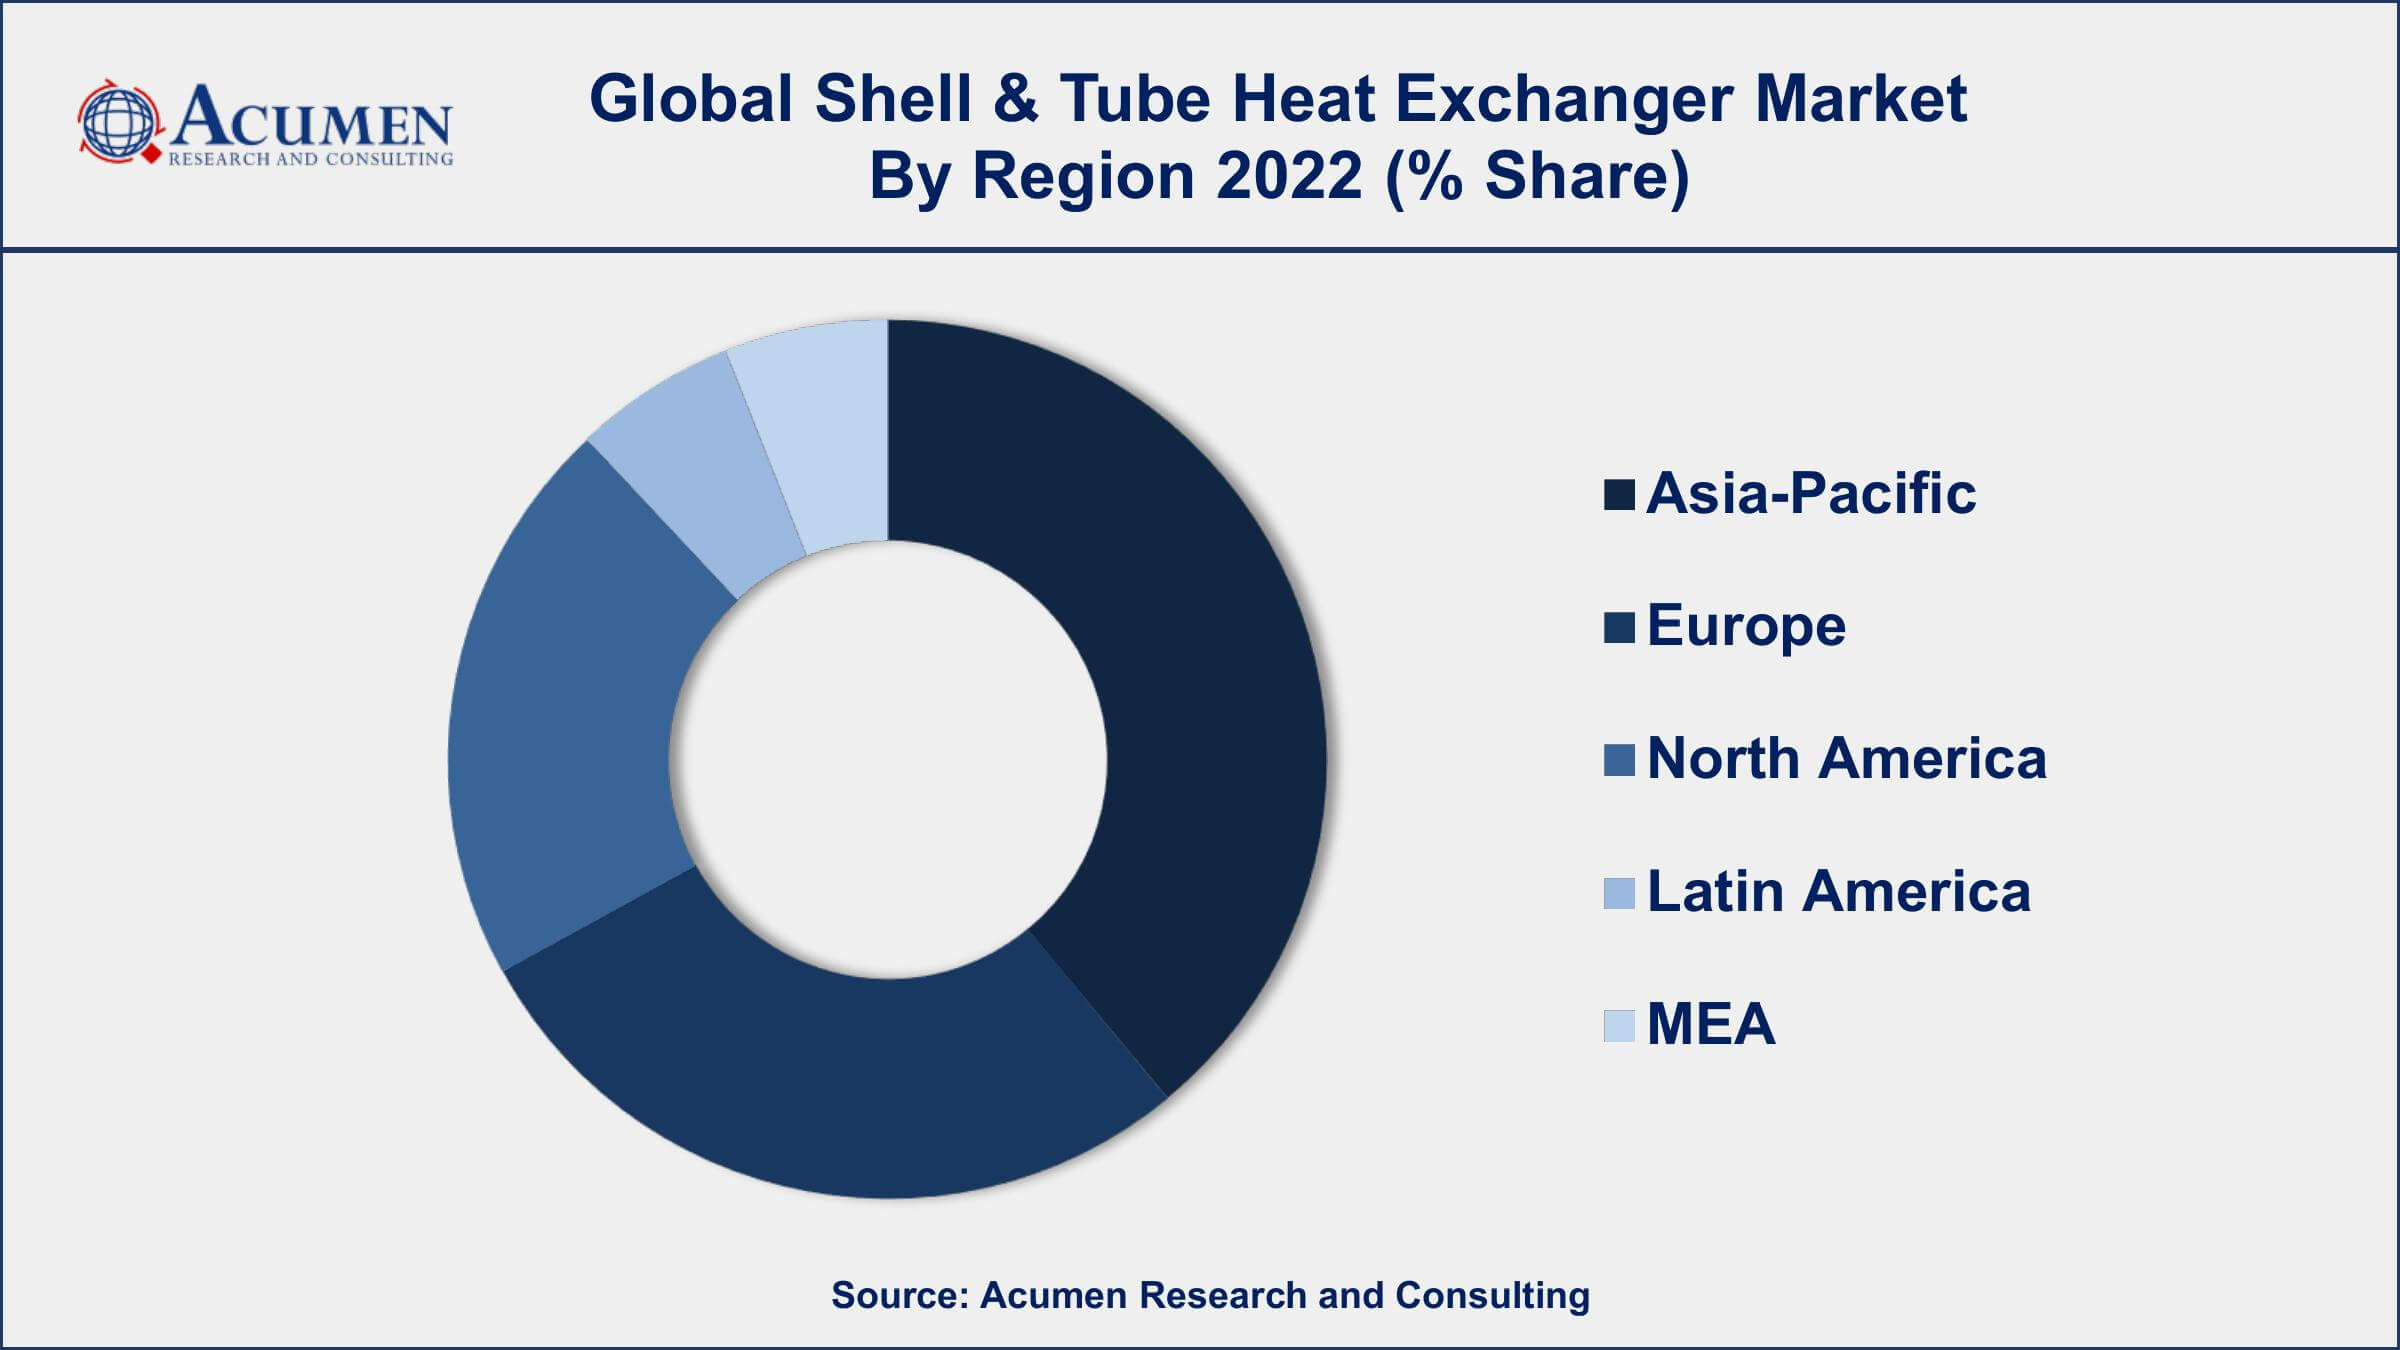 Shell & Tube Heat Exchanger Market Drivers